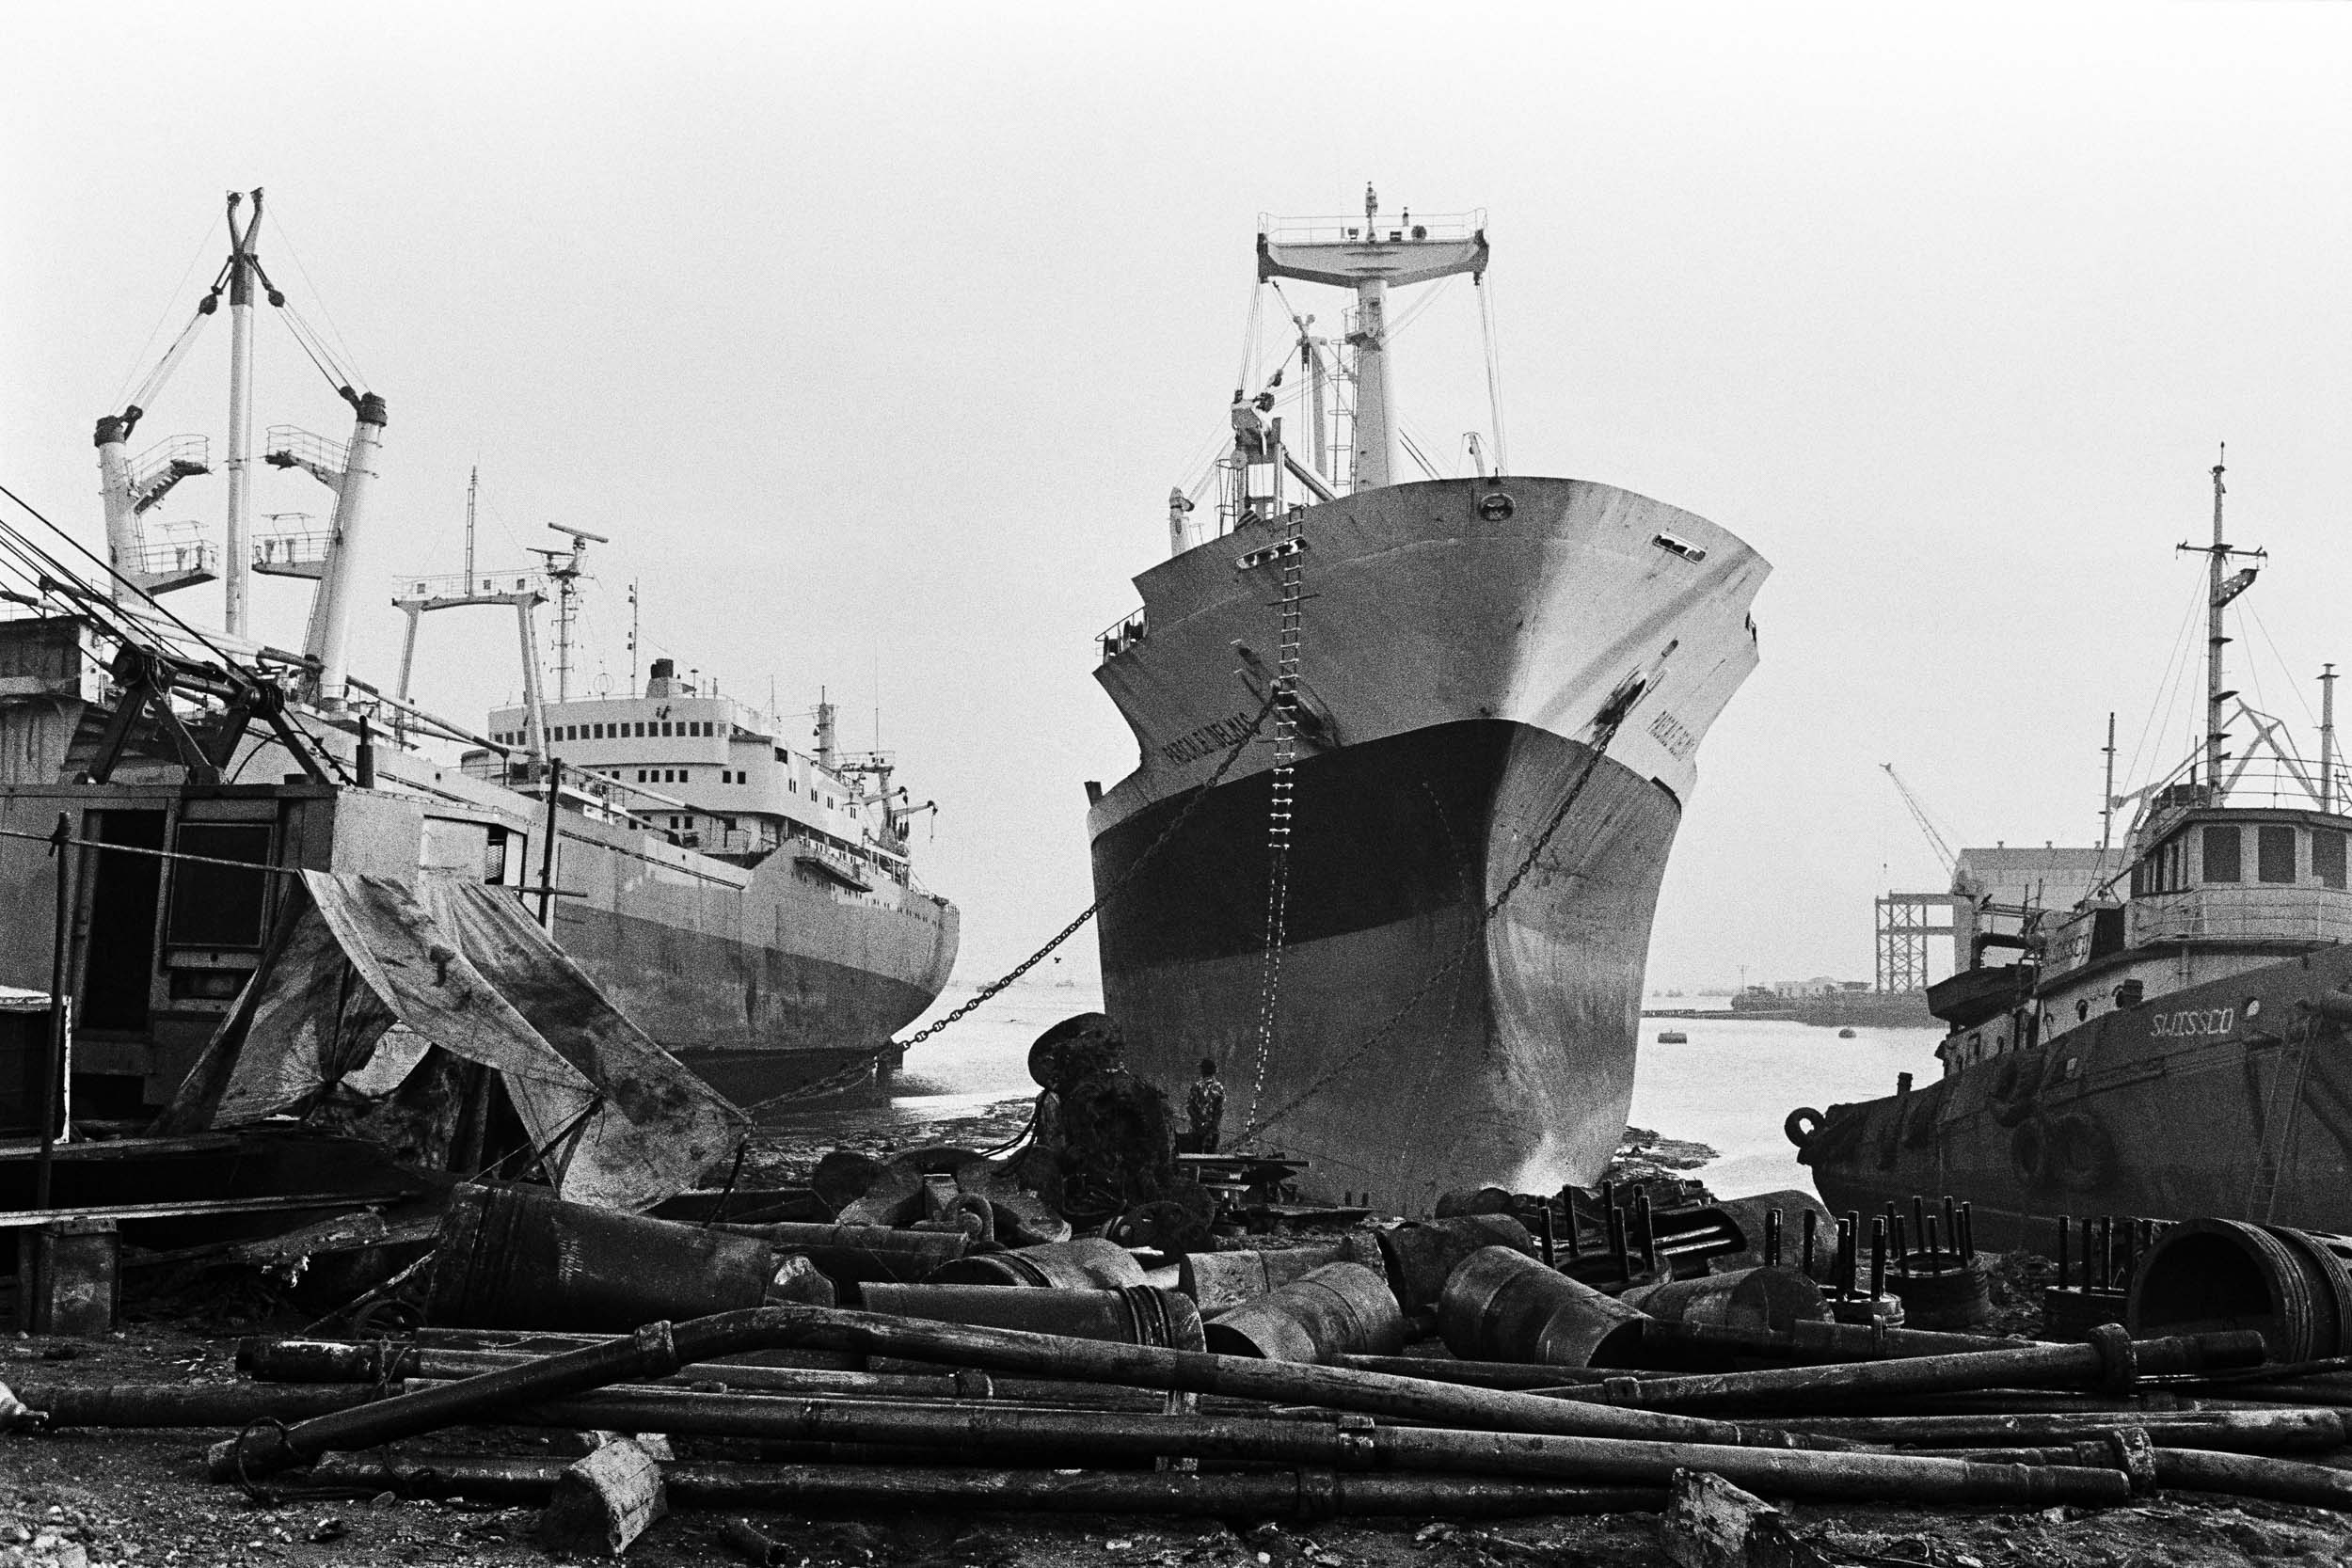 15_freelance photographer_new delhi_india_srinivas kuruganti_ship breaking yards.jpg